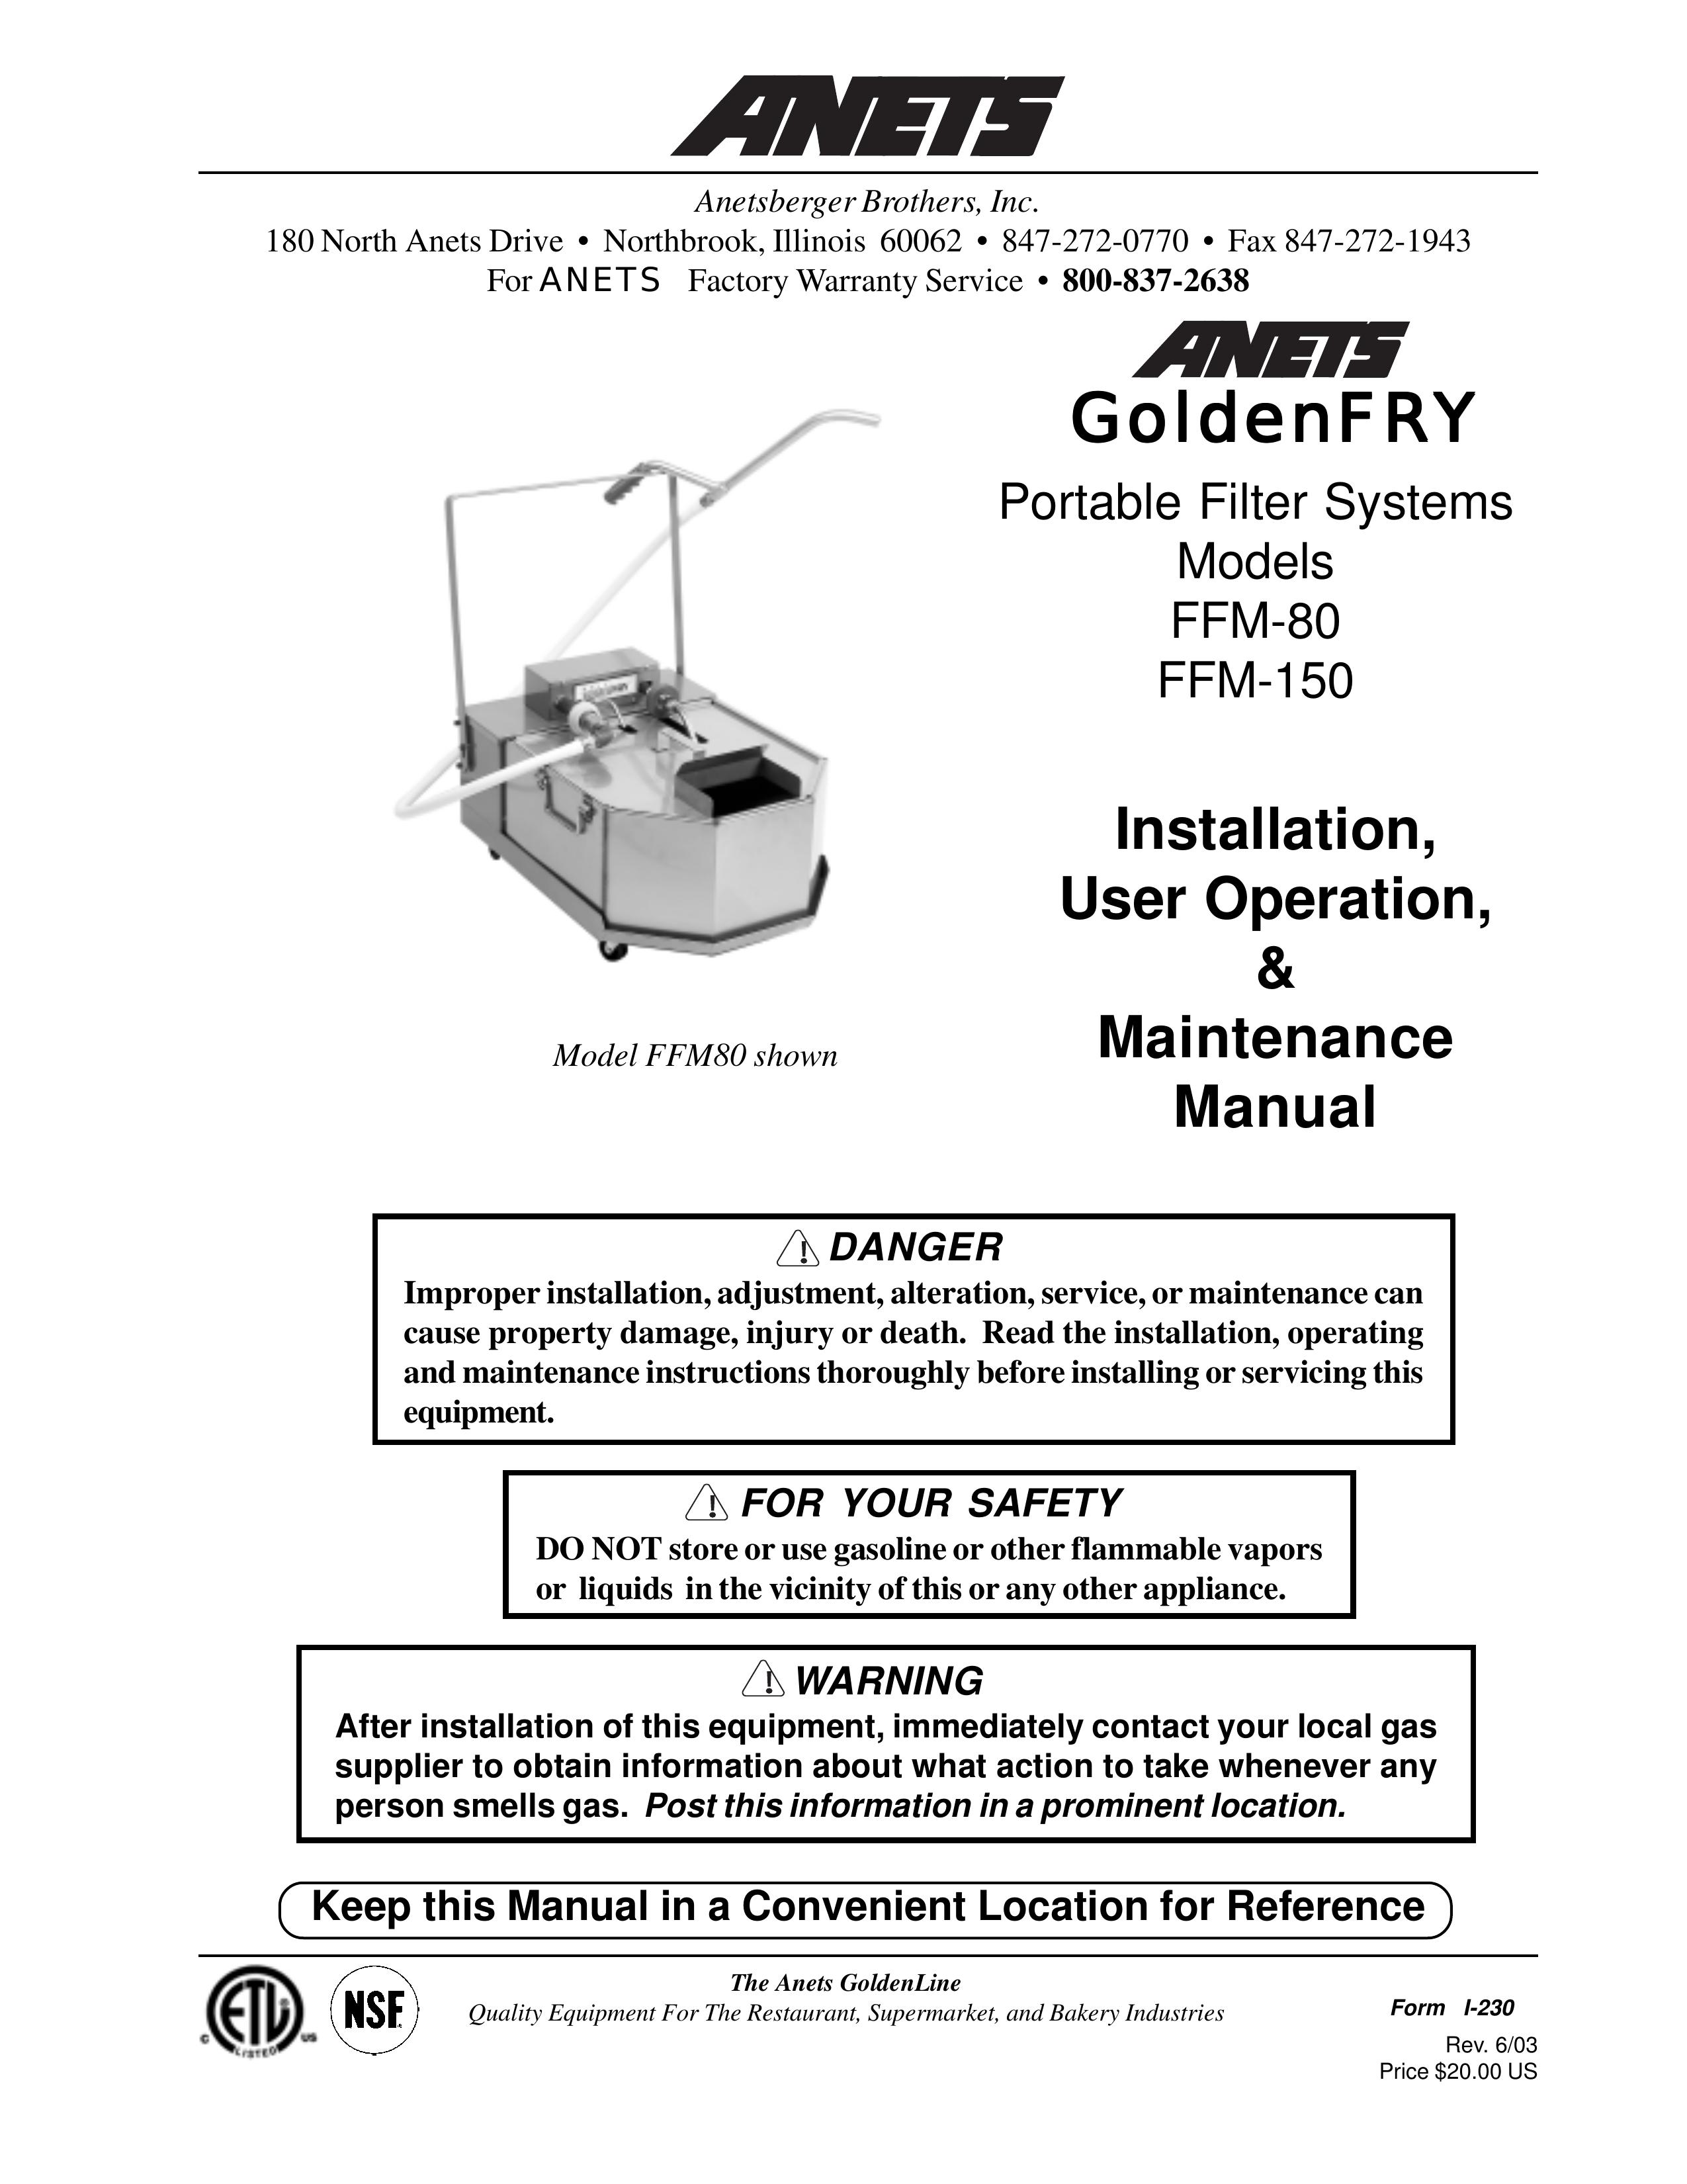 Anetsberger Brothers FFM-80 Water Dispenser User Manual